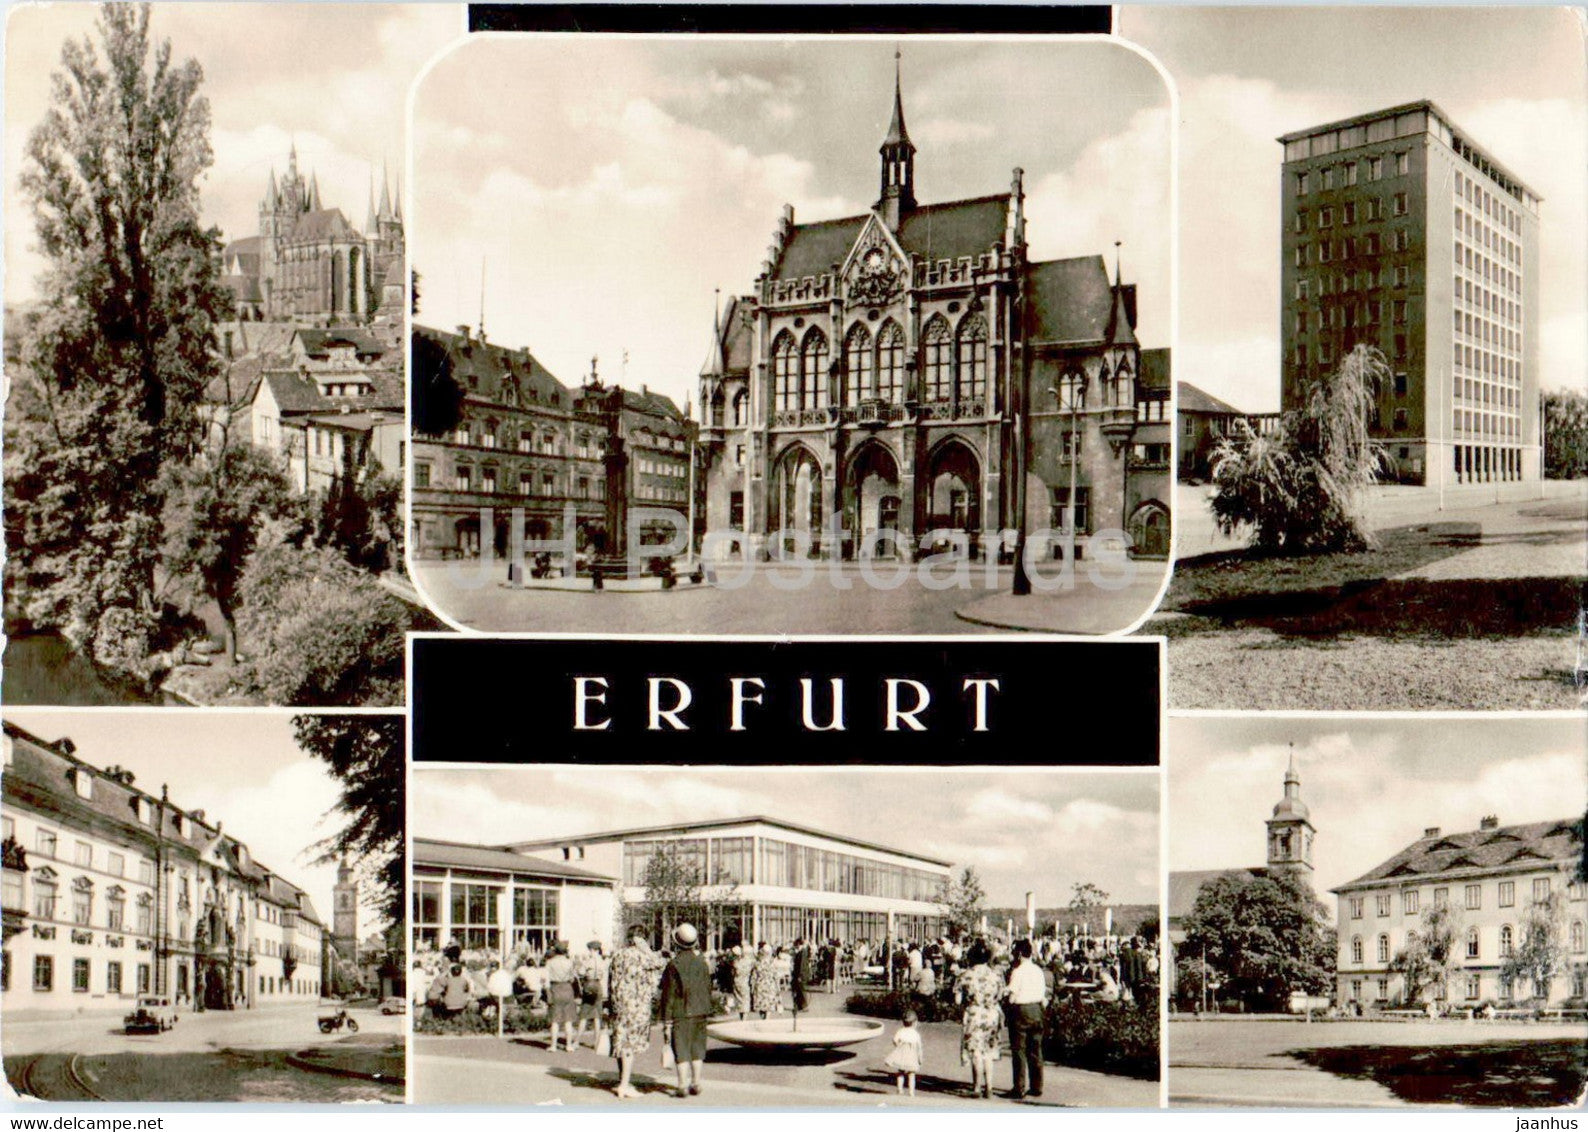 Erfurt - Dom und Severi - Rathaus - Regierungsstrasse - Karl Marx Platz - old postcard - 1969 - Germany DDR - used - JH Postcards